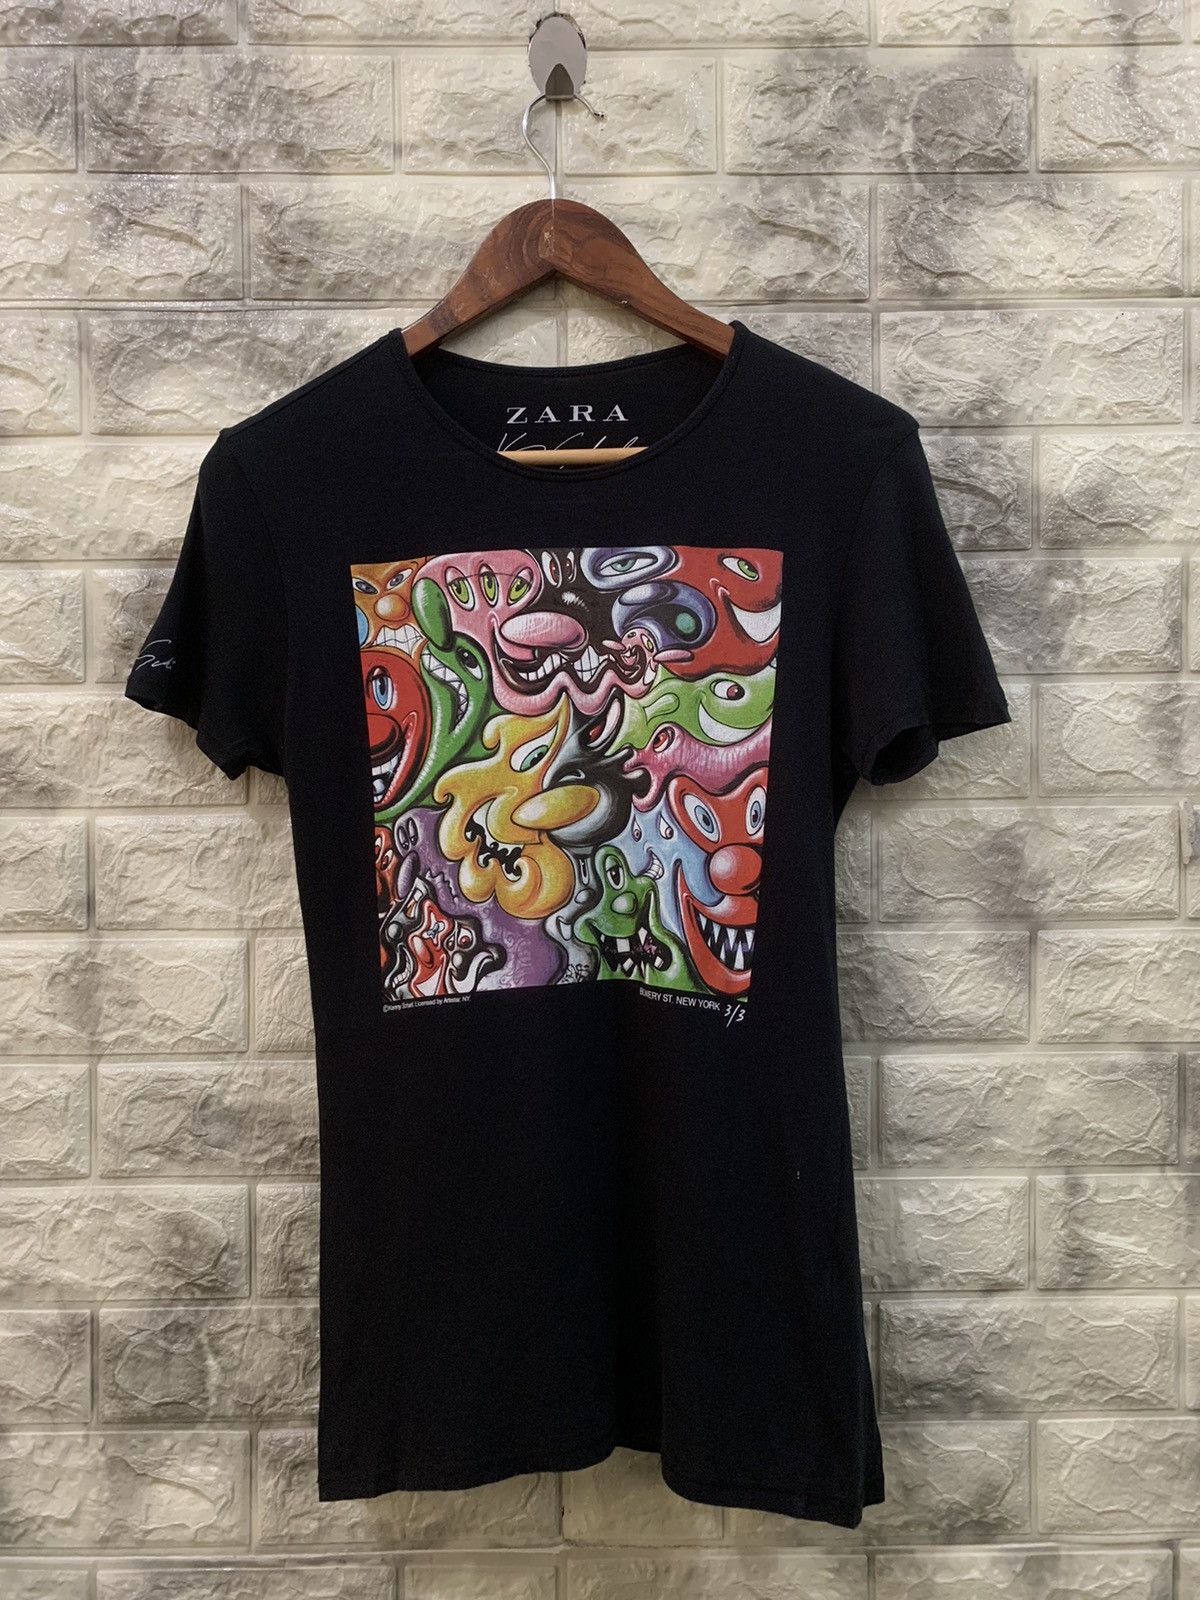 Zara Zara + Kenny Scharf black tee | Grailed